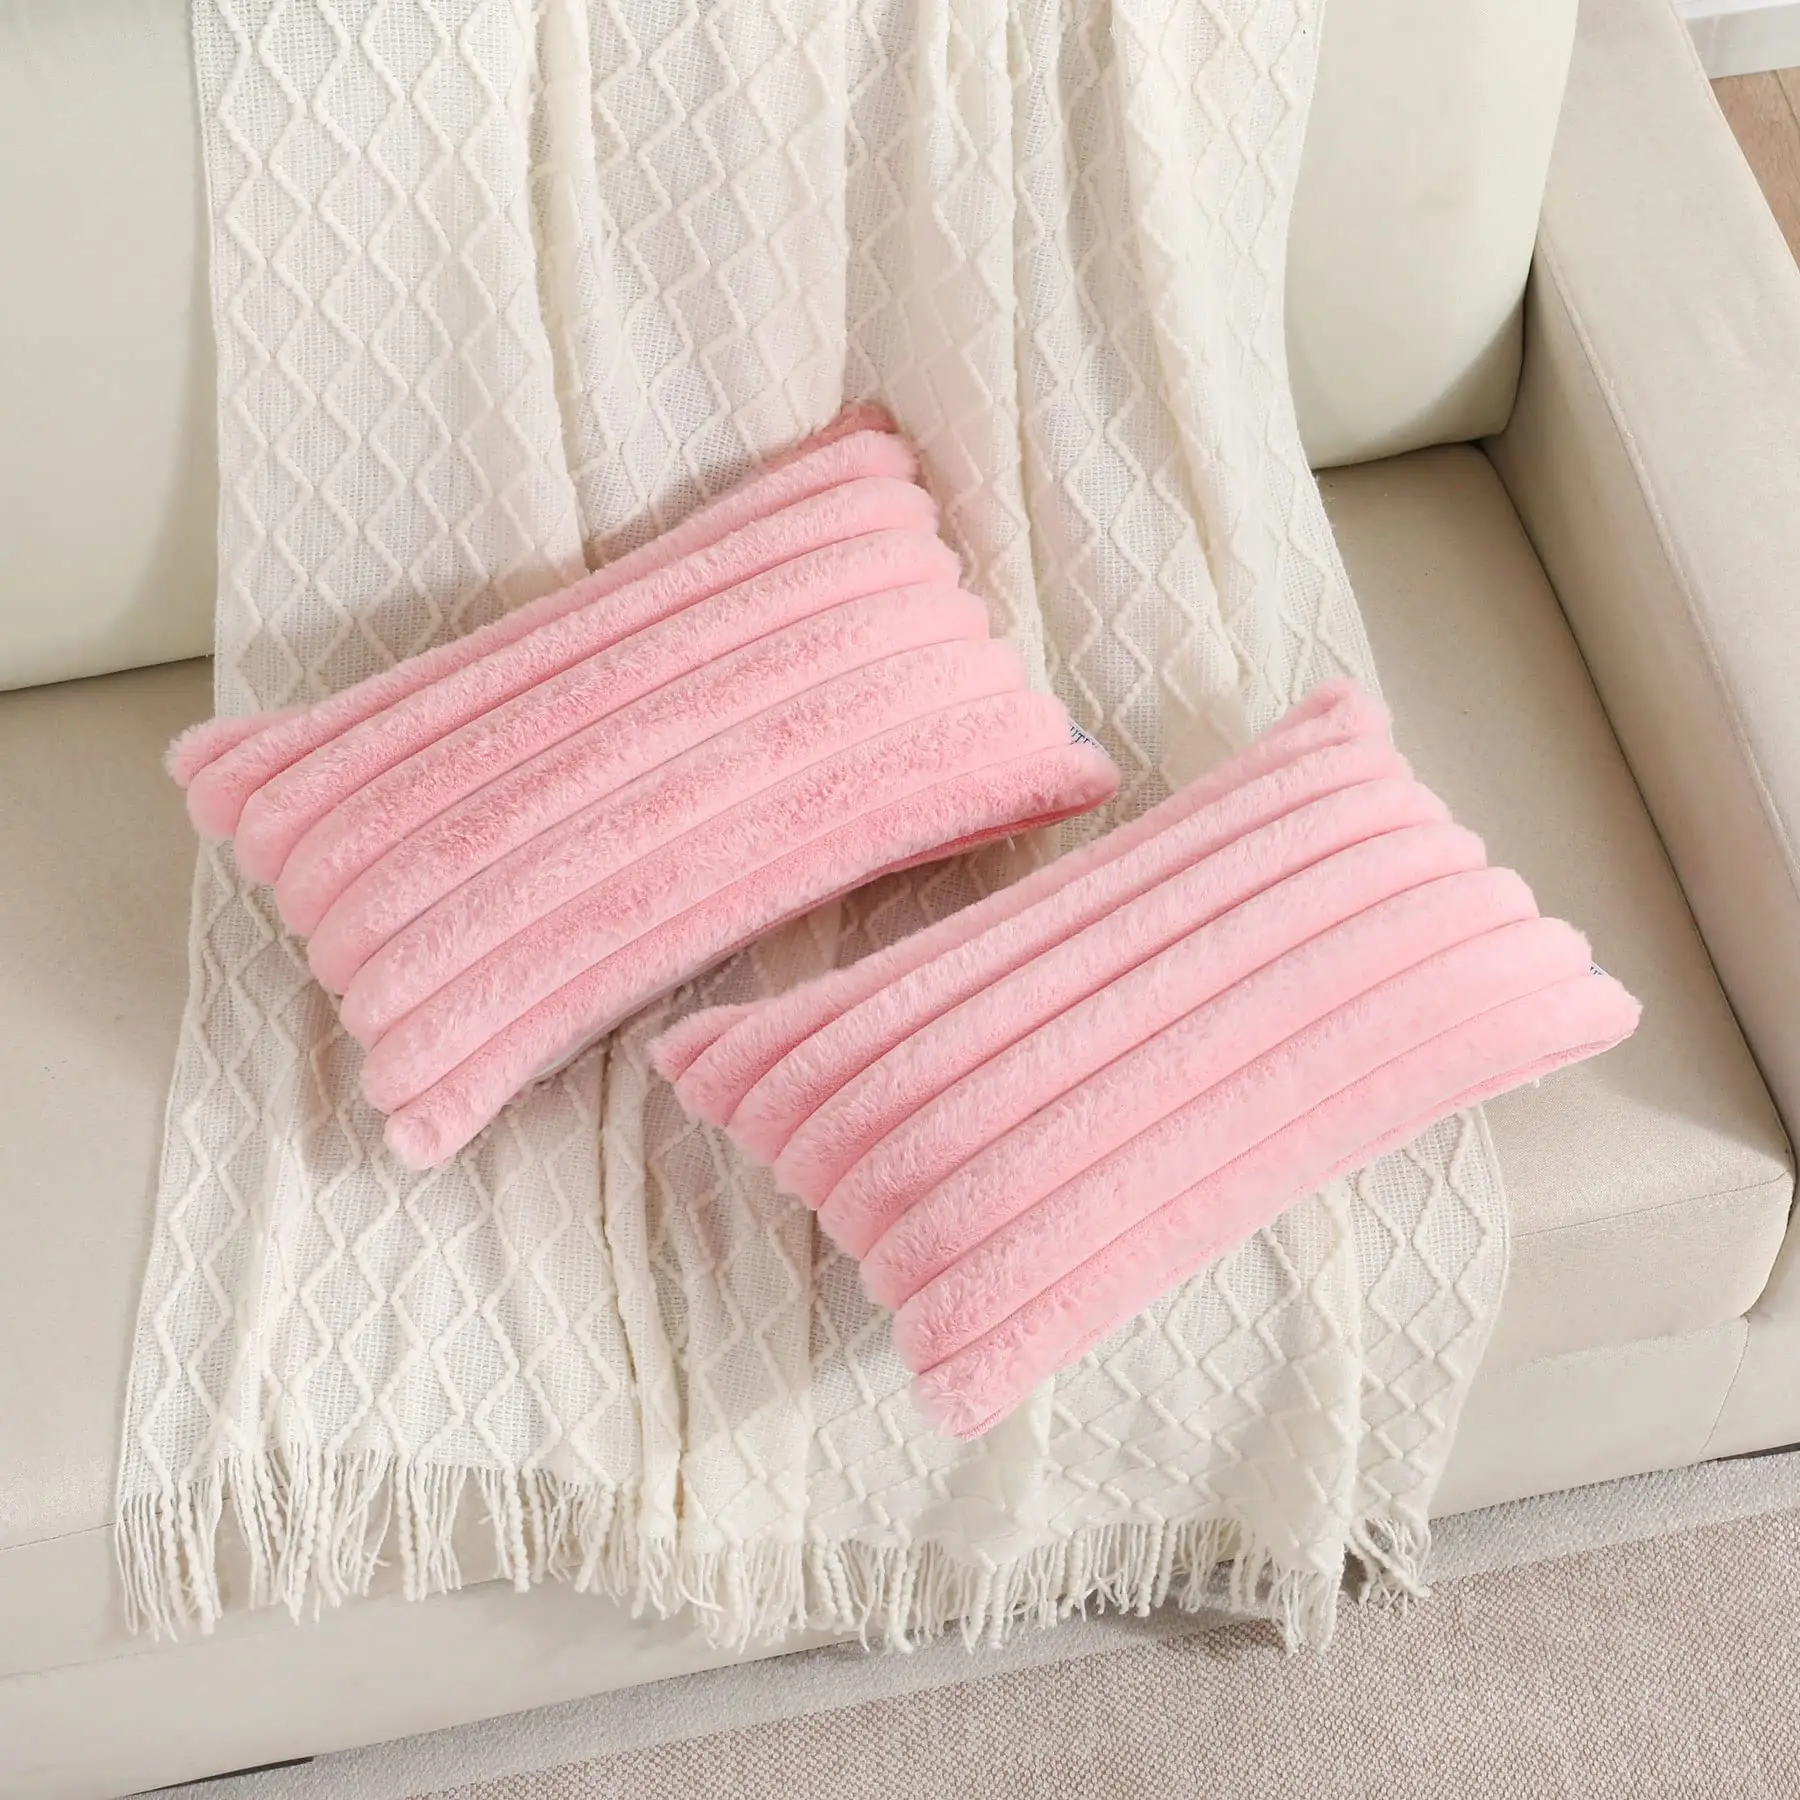 Sarung bantal Sofa mewah bergaris, sarung bantal dekoratif bulu kelinci imitasi & beludru lembut nyaman ukuran 30*50cm